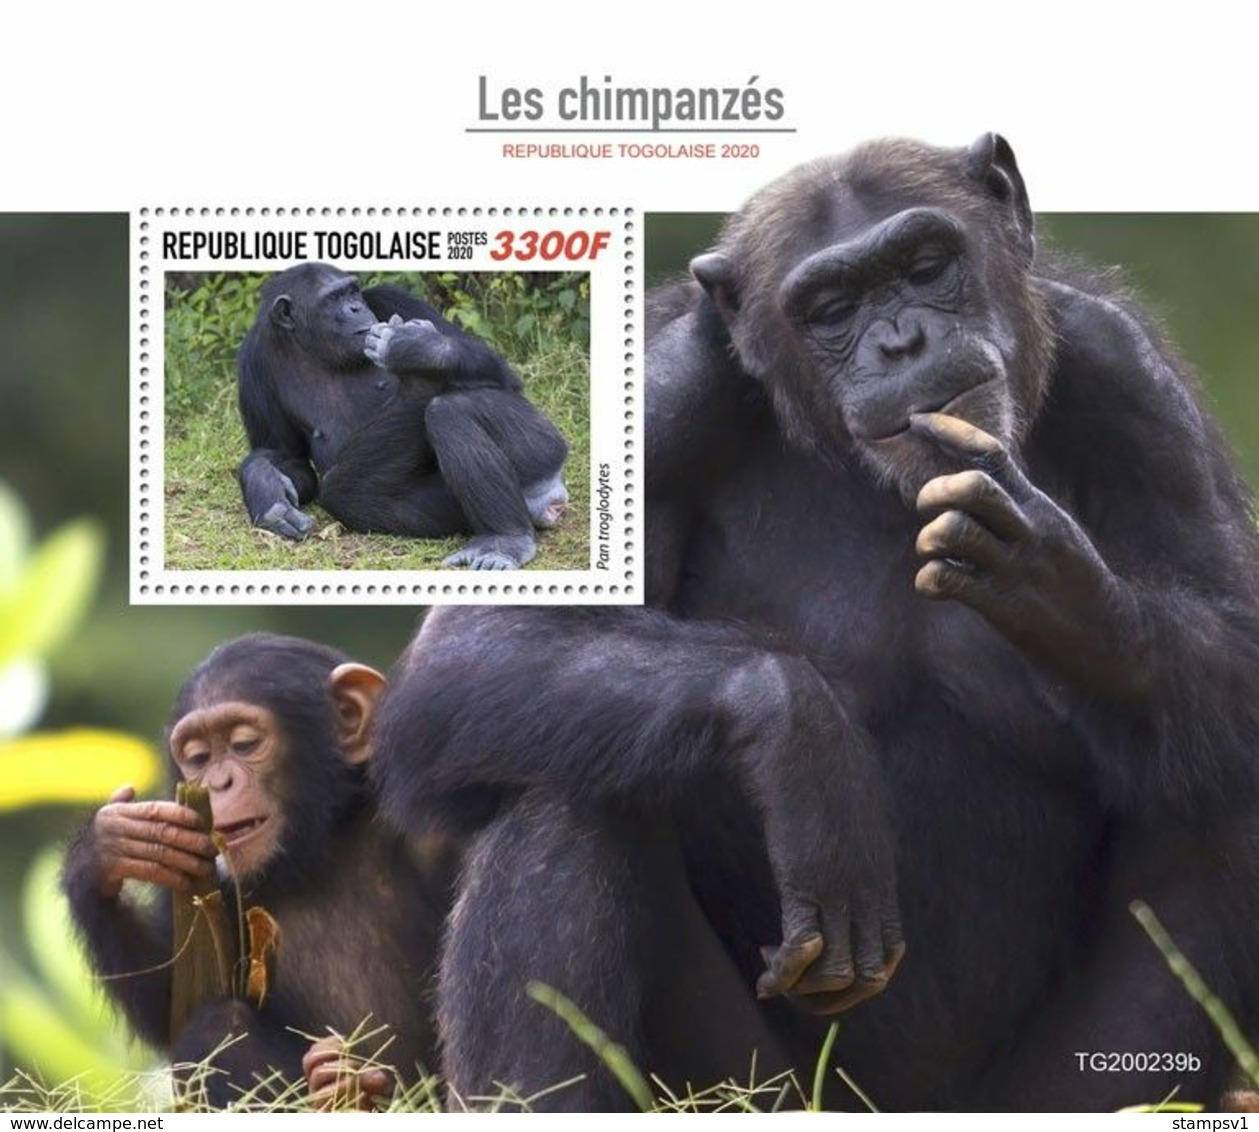 Togo 2020 Chimpanzees. (0239b) OFFICIAL ISSUE - Chimpanzees